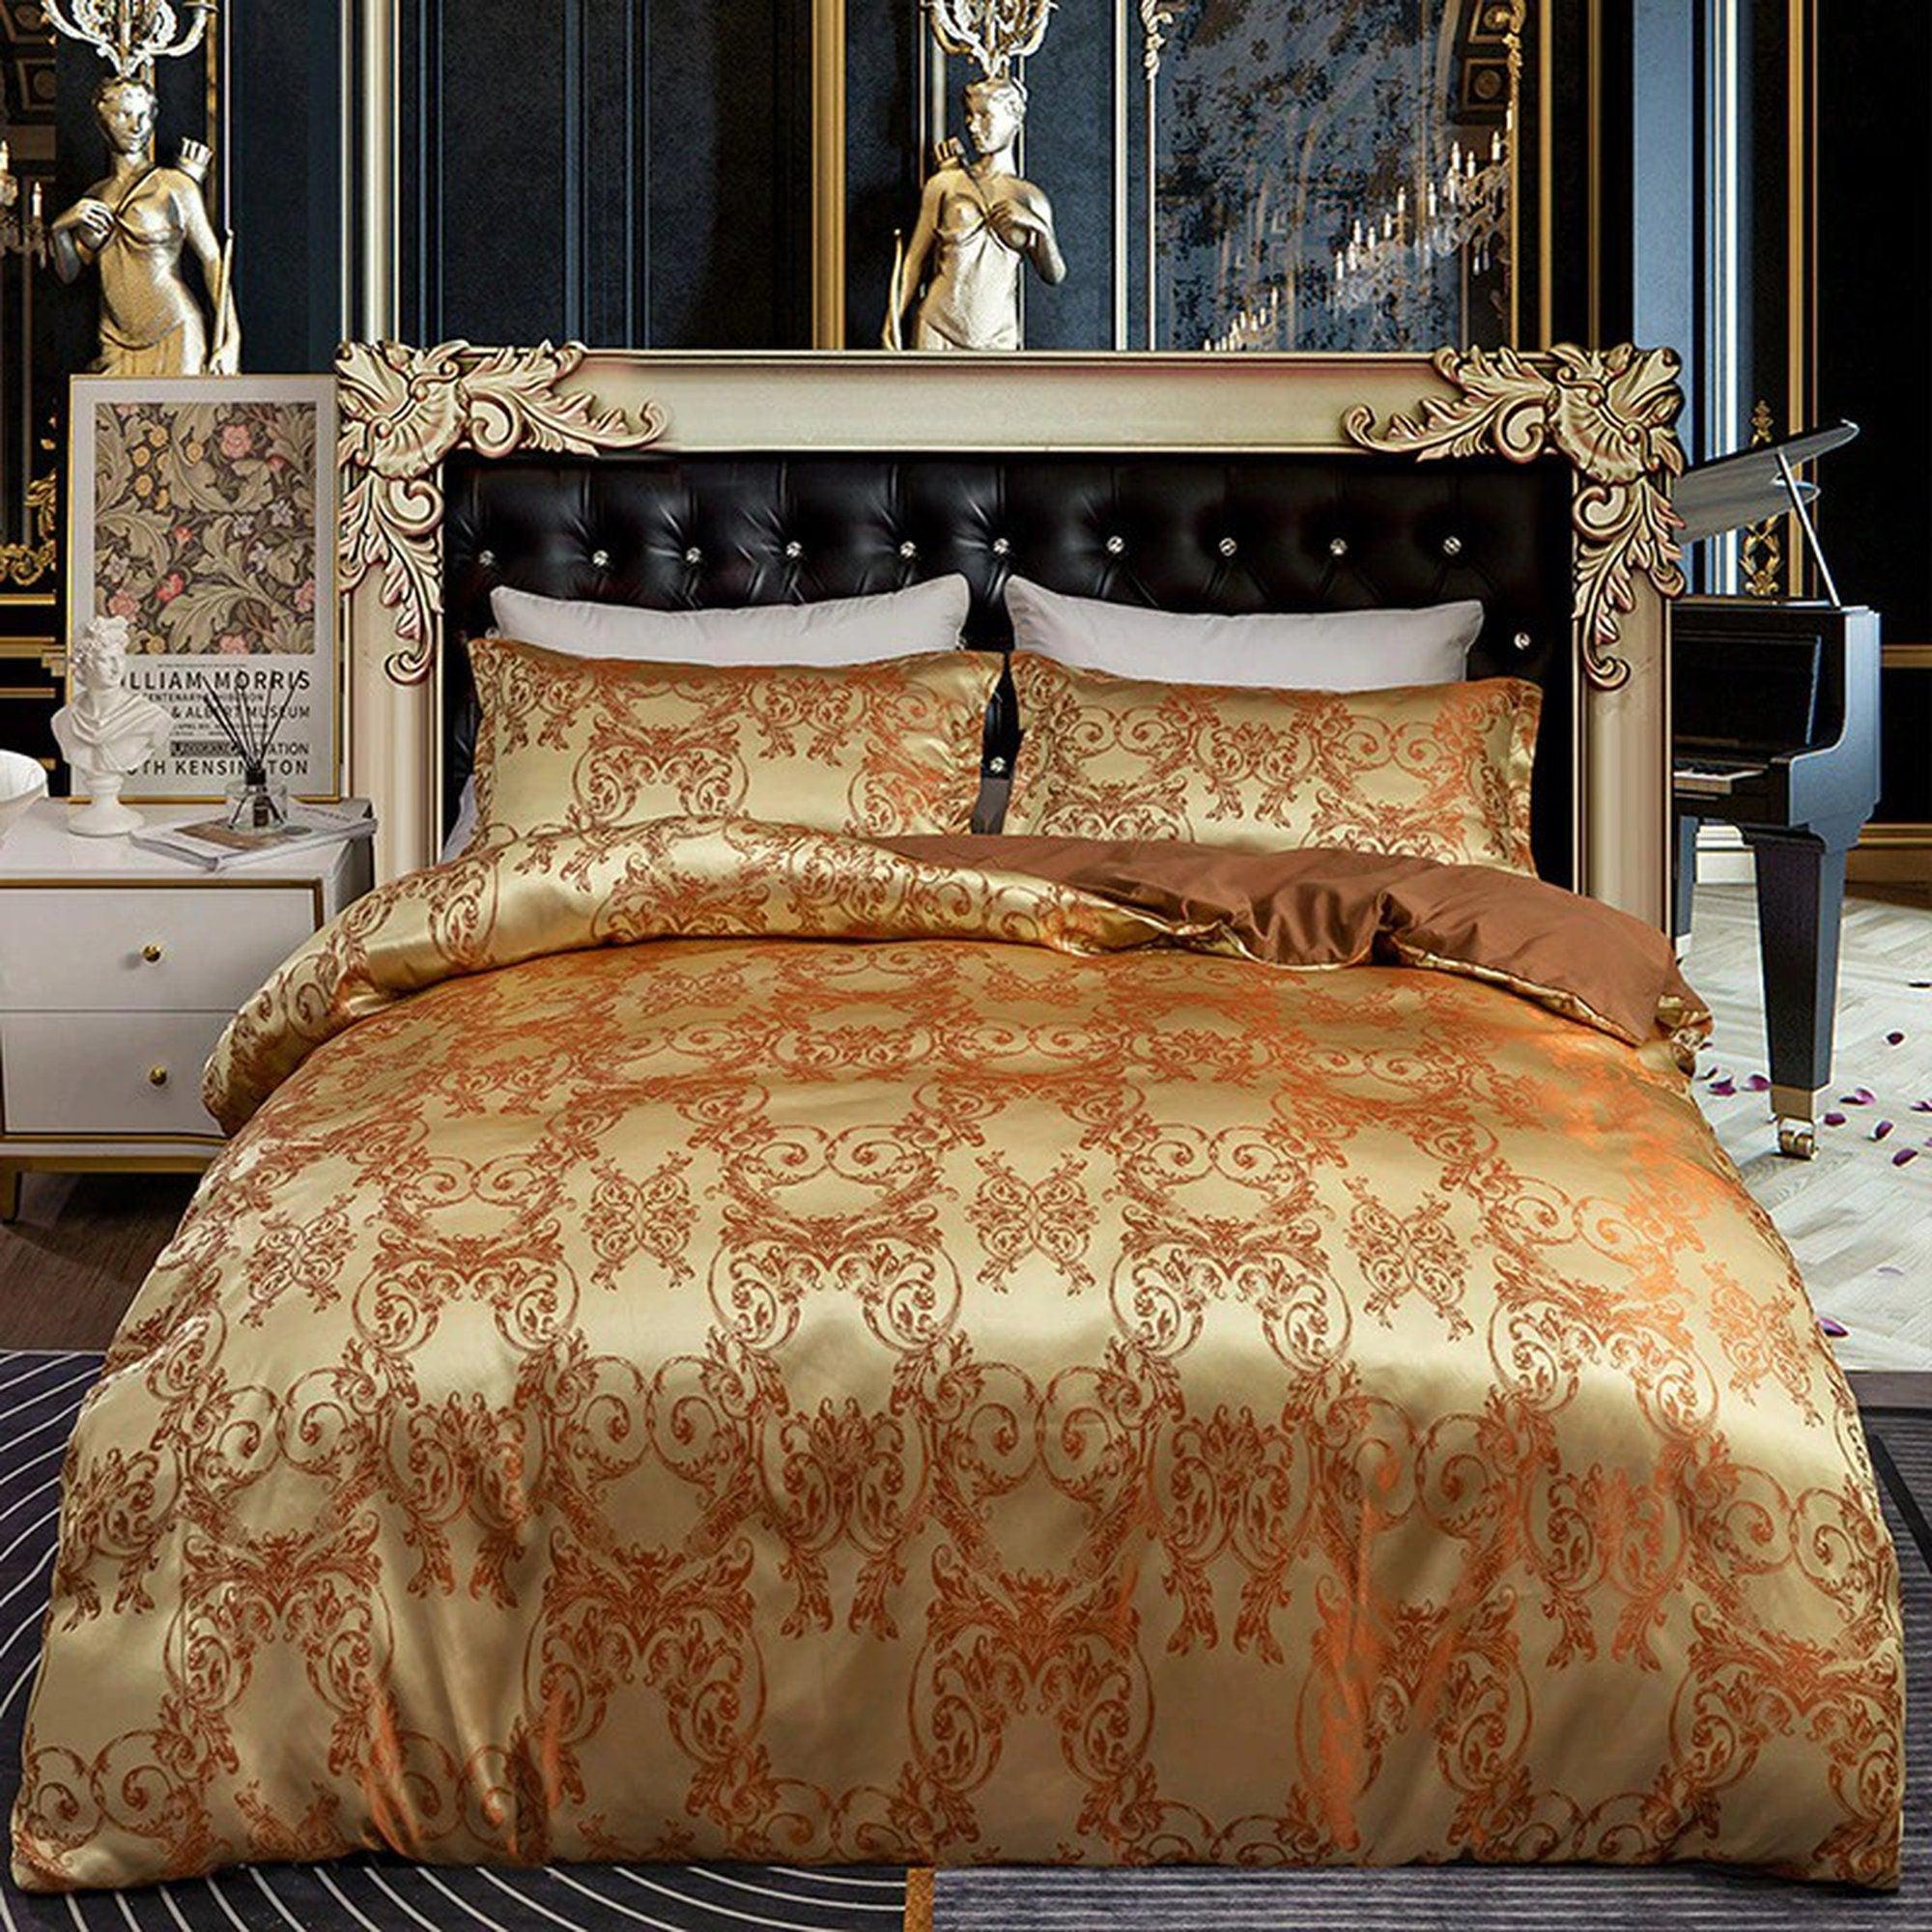 daintyduvet Luxury Golden Brown Bedding made with Silky Jacquard Fabric, Damask Duvet Cover Set, Designer Bedding, Aesthetic Duvet King Queen Full Twin